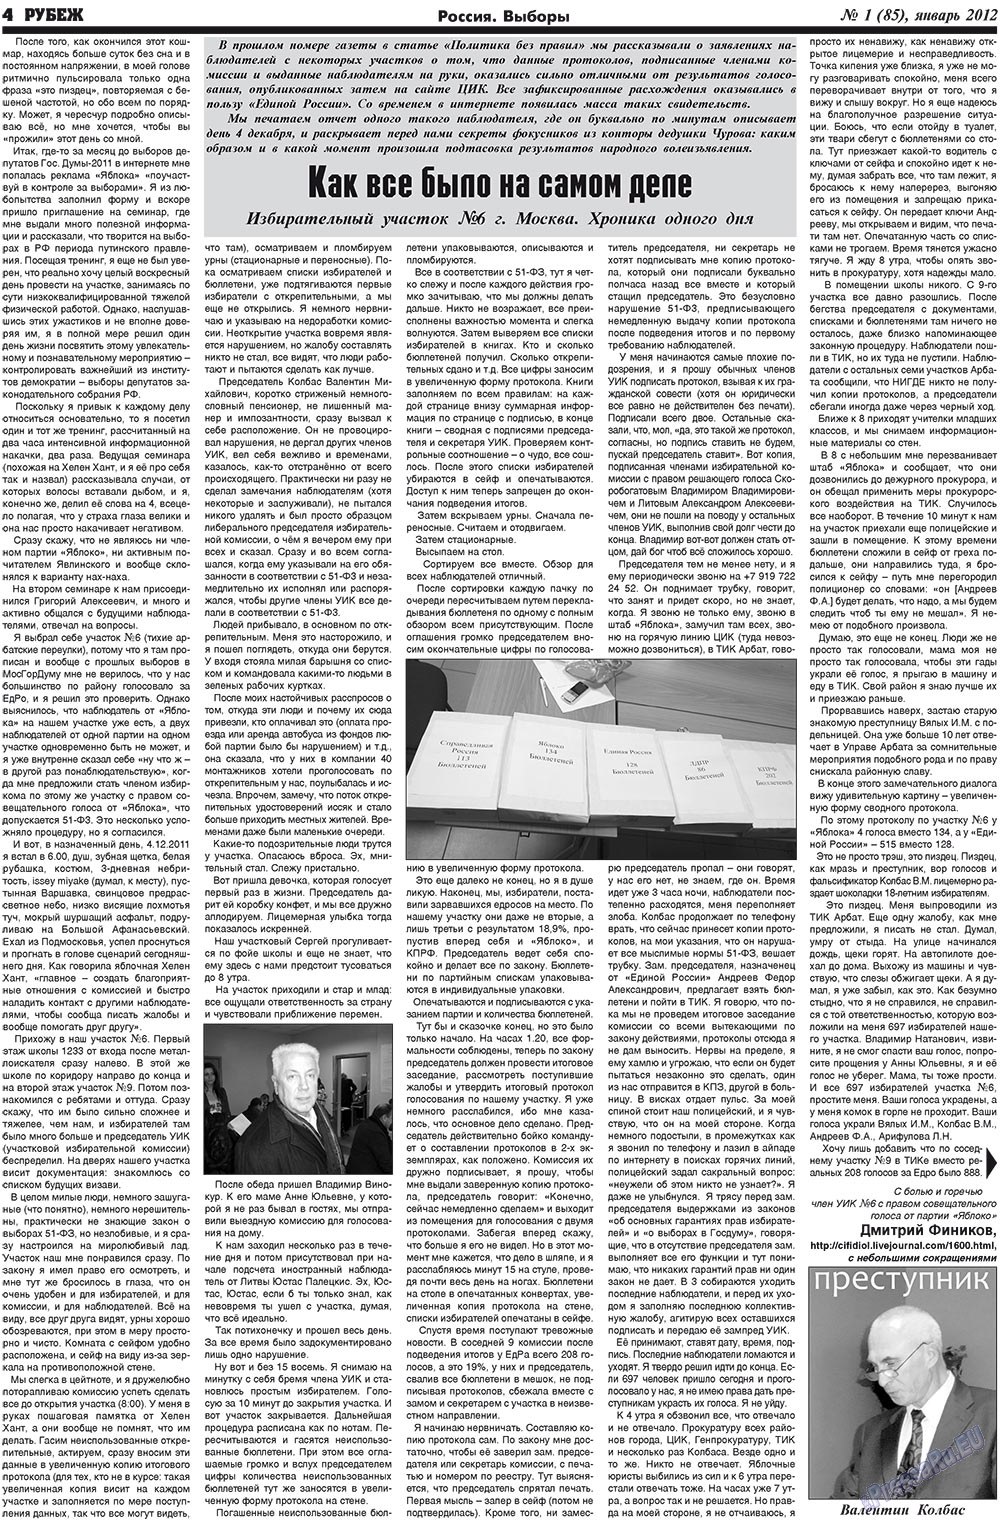 Рубеж, газета. 2012 №1 стр.4